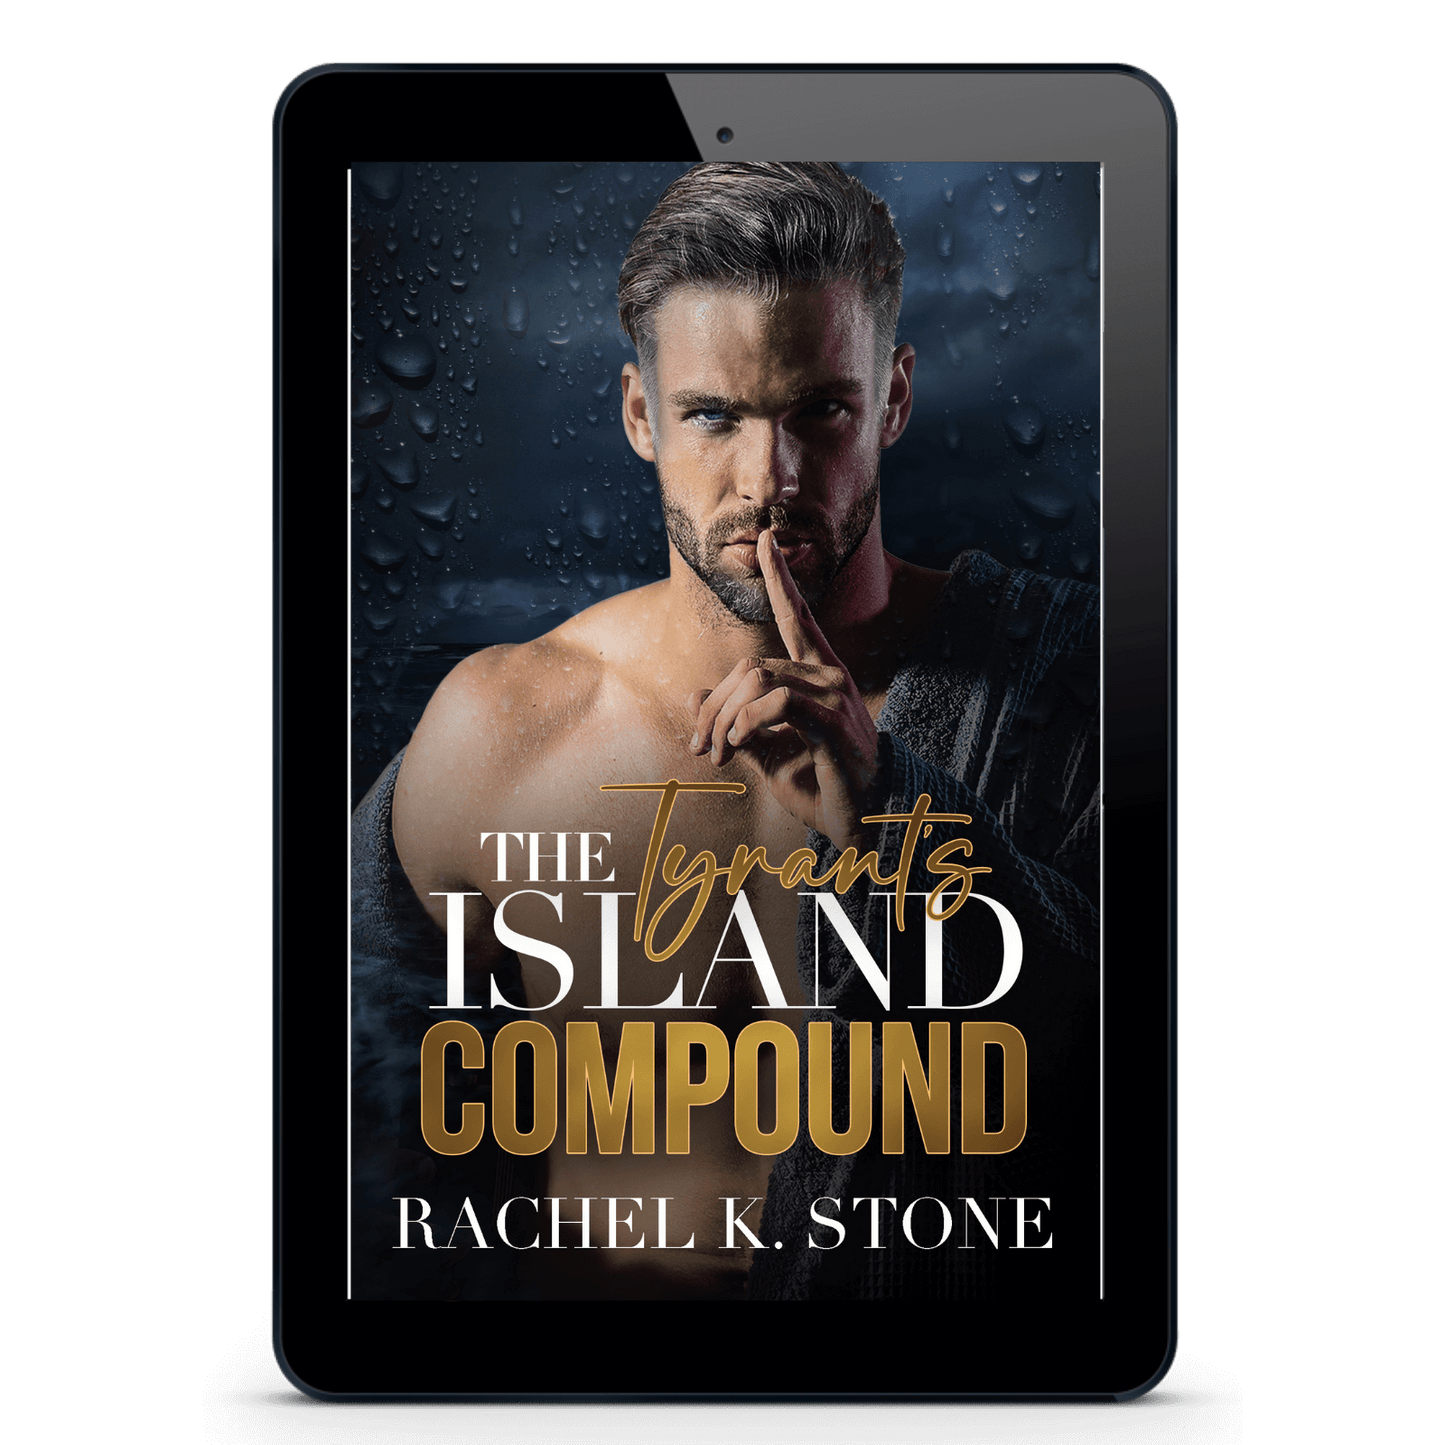 The Tyrant's Island Compound Romance Novel